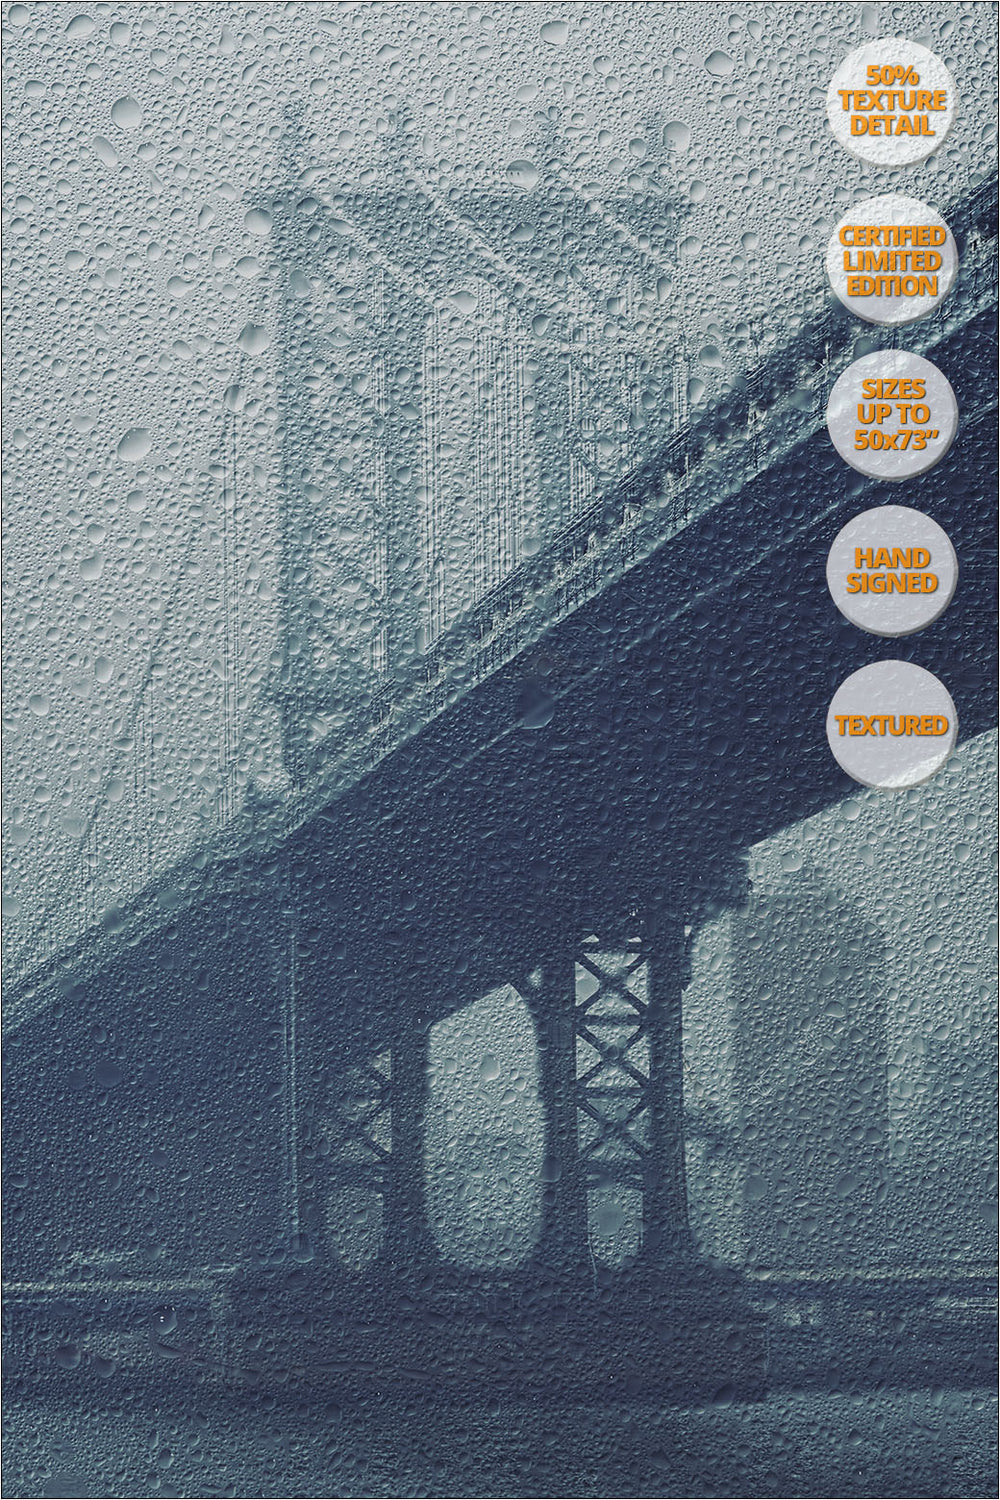 Manhattan Bridge Pillar, New York. | 50% Magnification Detail.